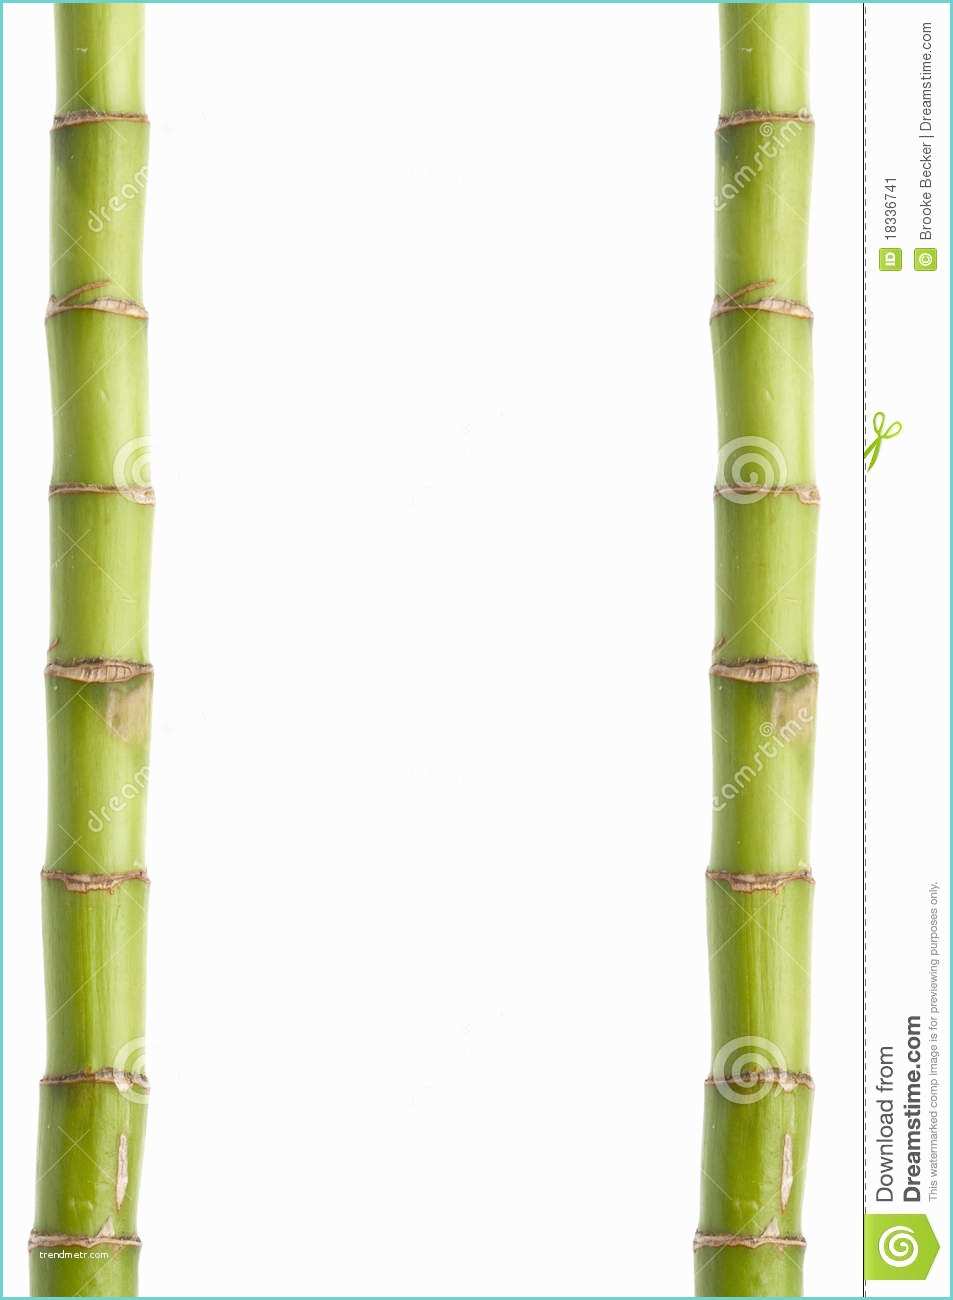 Tige De Bambou Naturel Cadre Ou Fond En Bambou Frais De Tige Image Stock Image